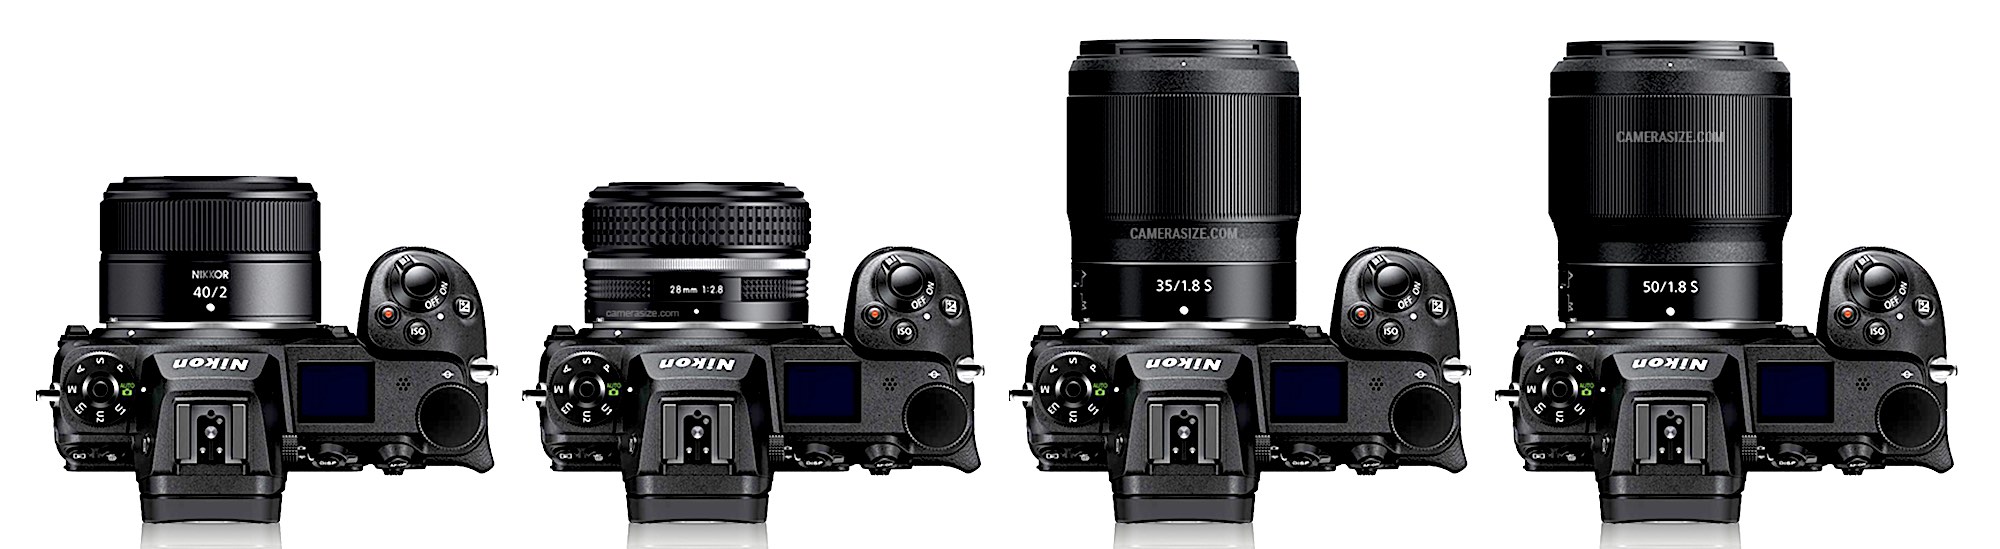 Nikon Nikkor Z 40mm f/2 lens comparisons - Nikon Rumors